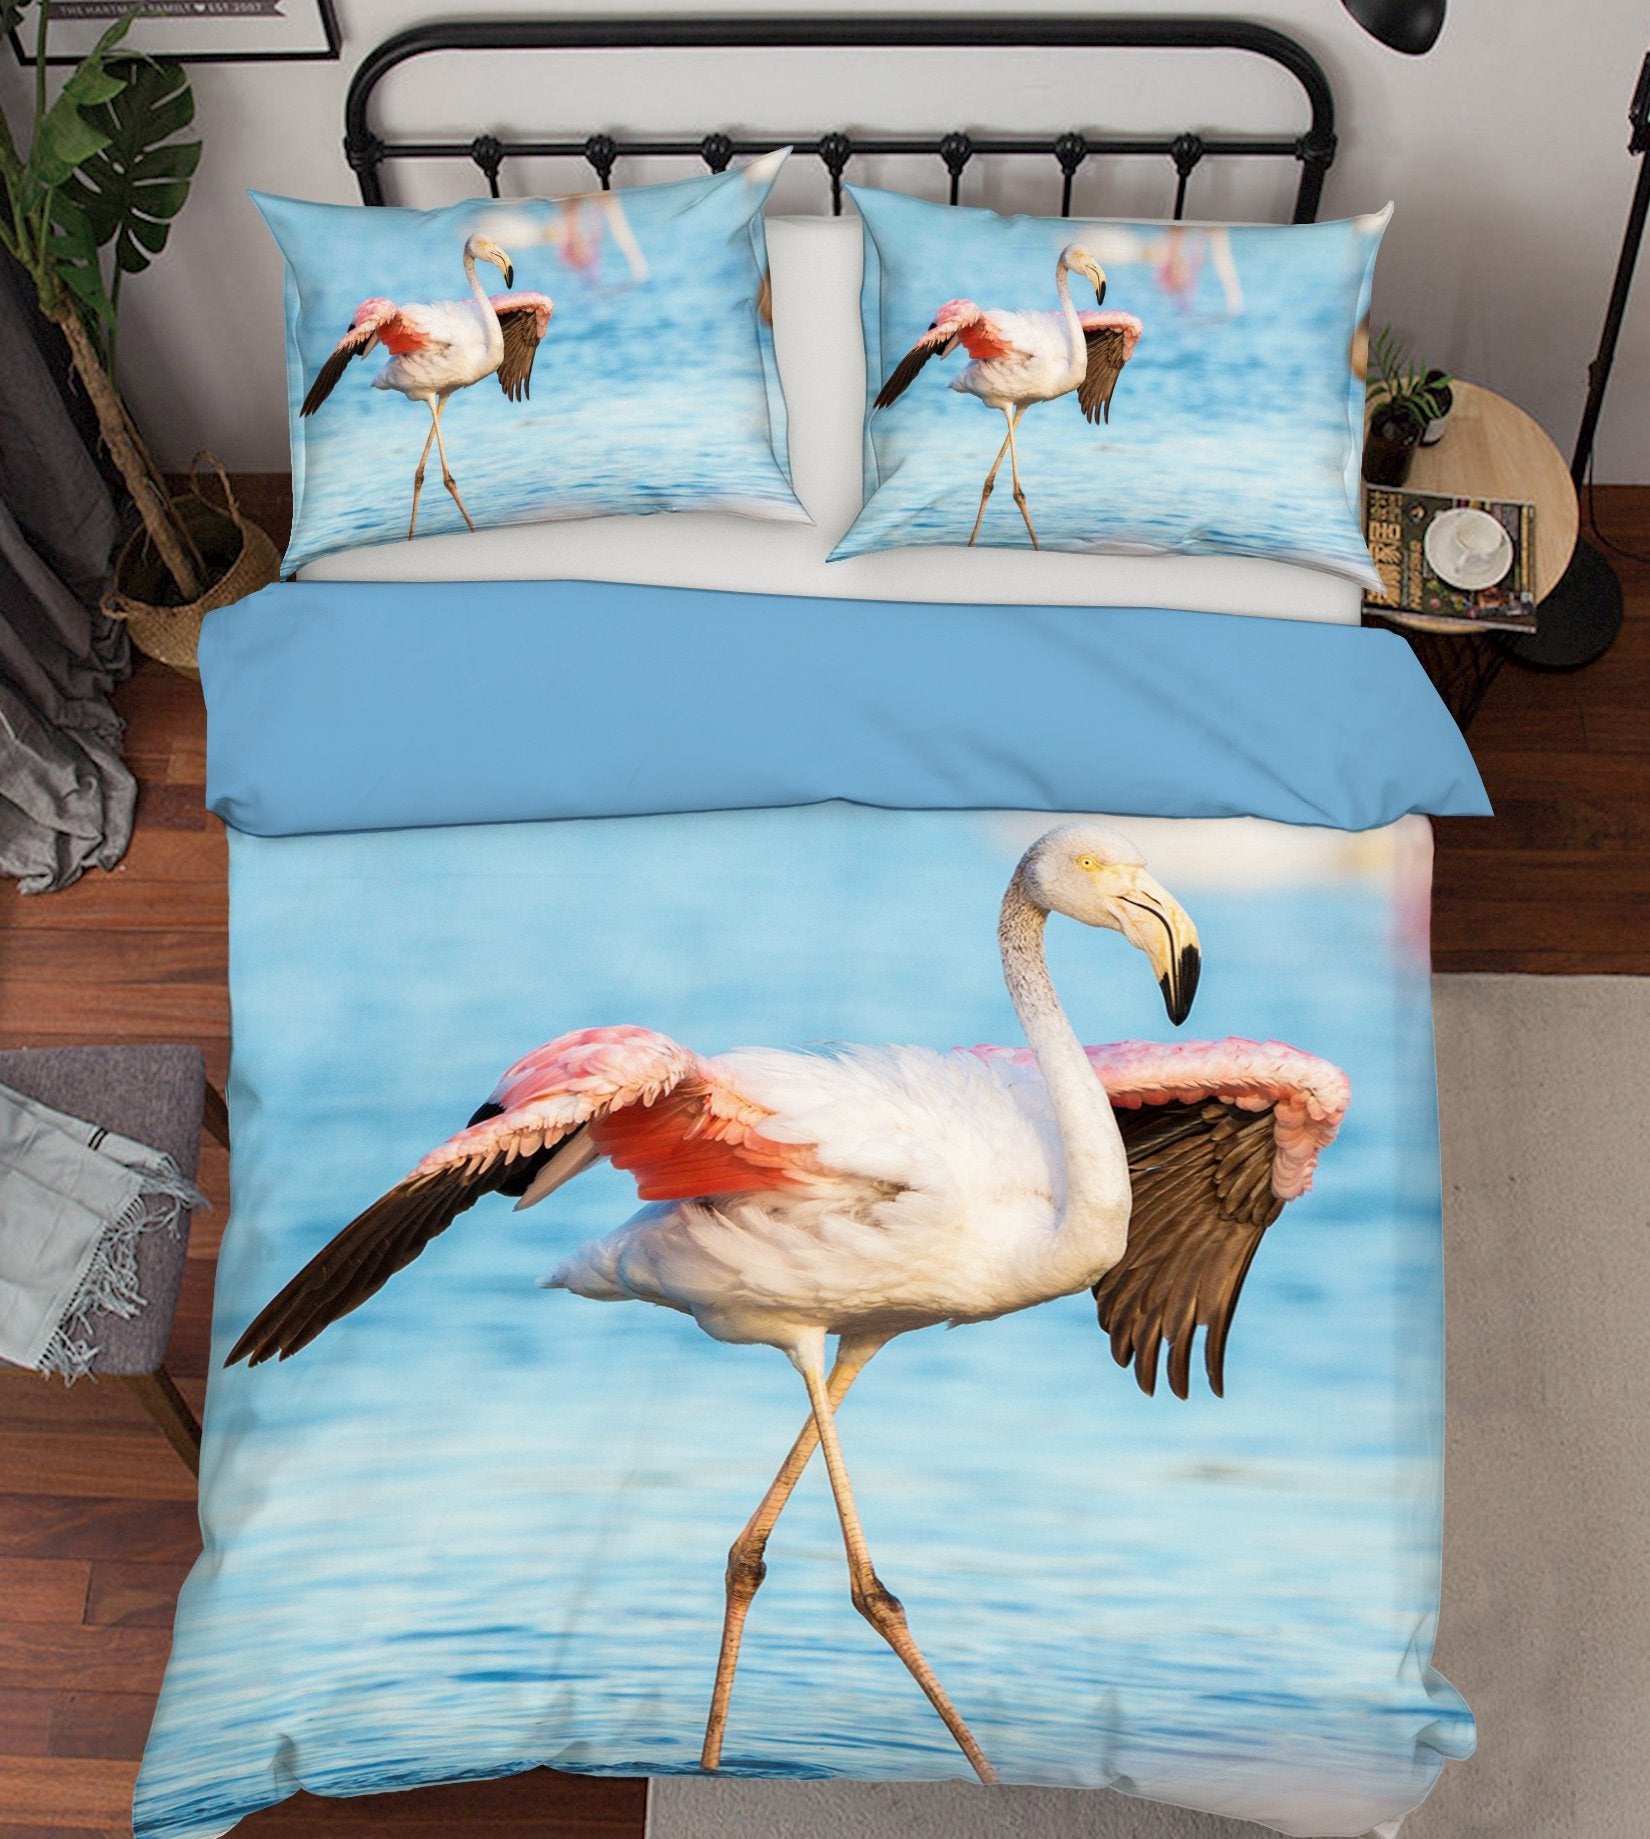 3D Flamingo 1940 Bed Pillowcases Quilt Quiet Covers AJ Creativity Home 